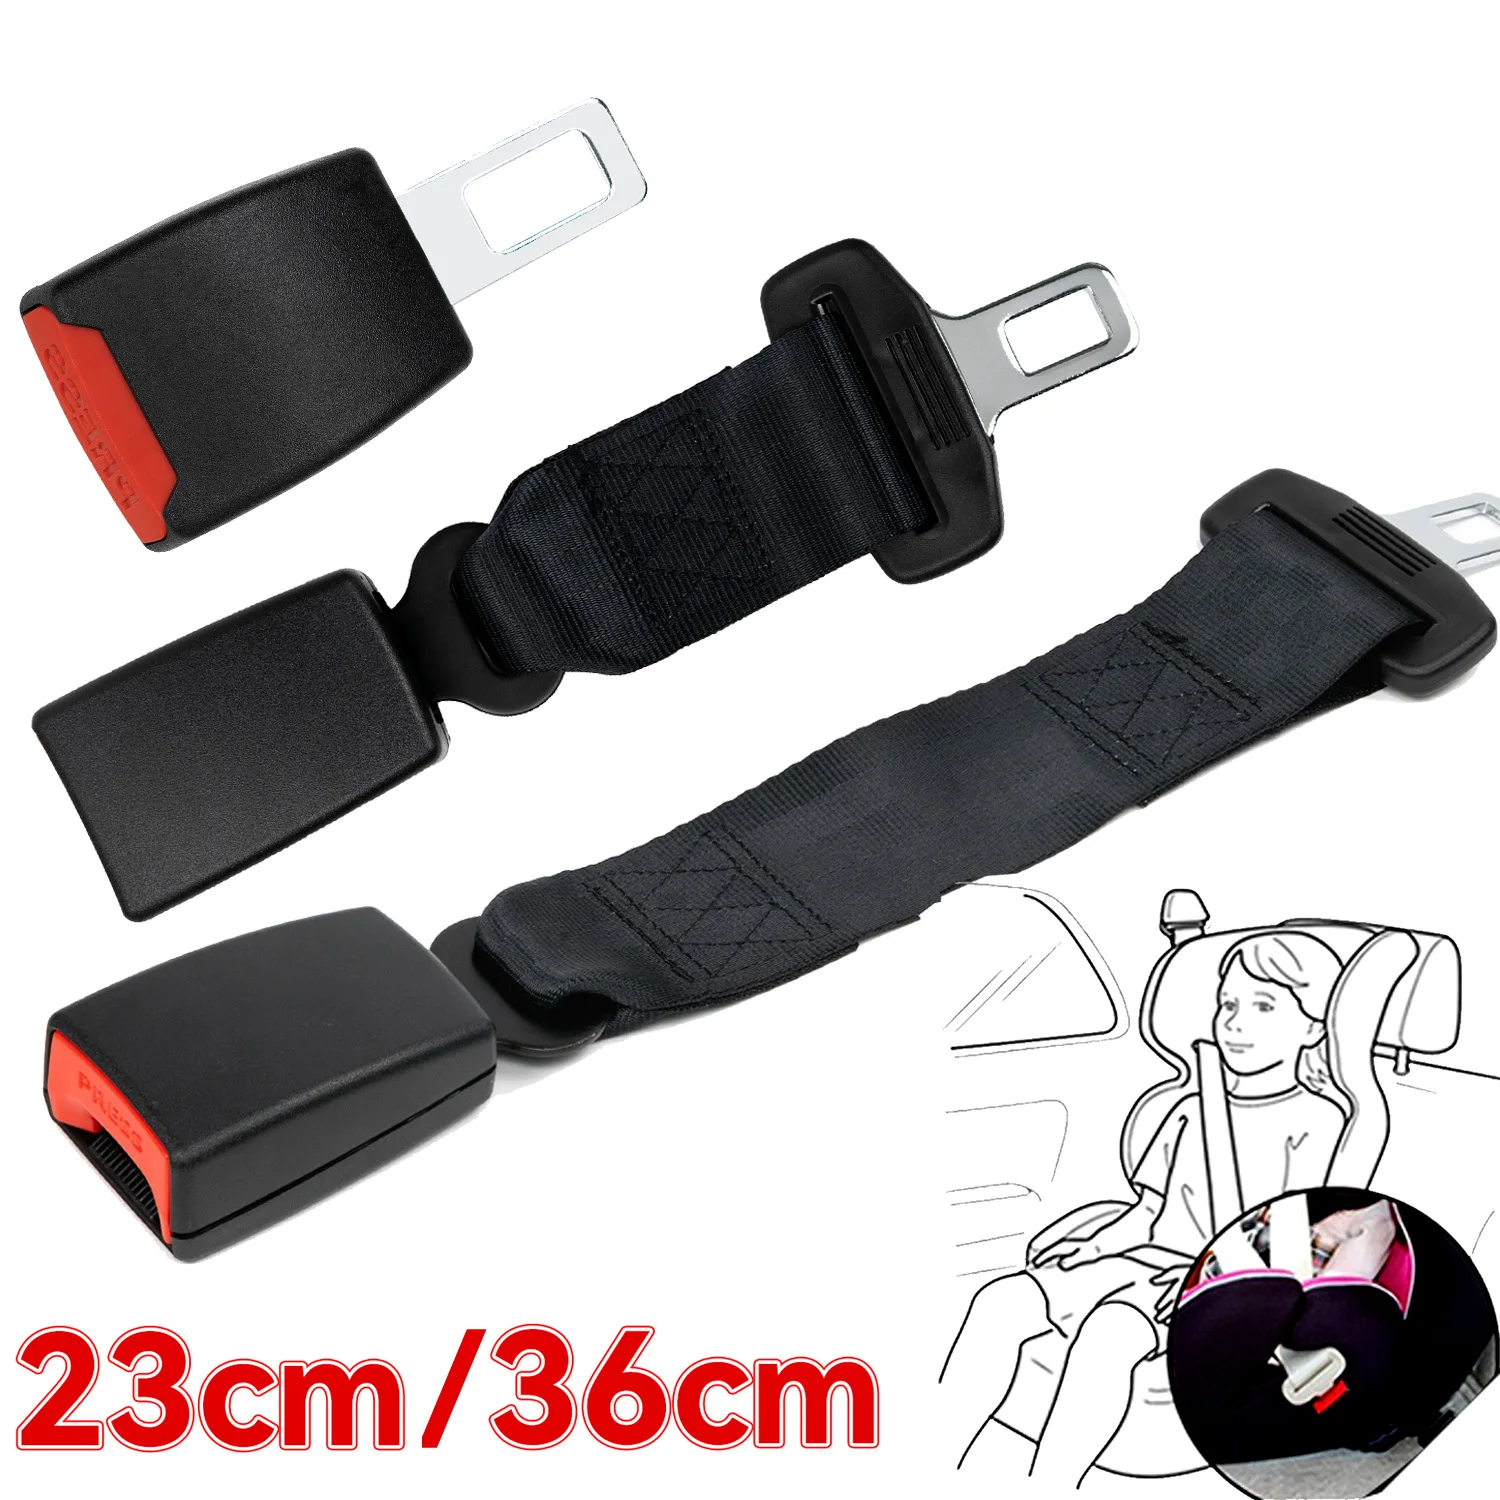 

Universal Car Vehicle Seat Belt Extension Plug Strap Safety Lock Clip Buckle Cover Seatbelt Extender Adjuster Alarm Stopper Stop